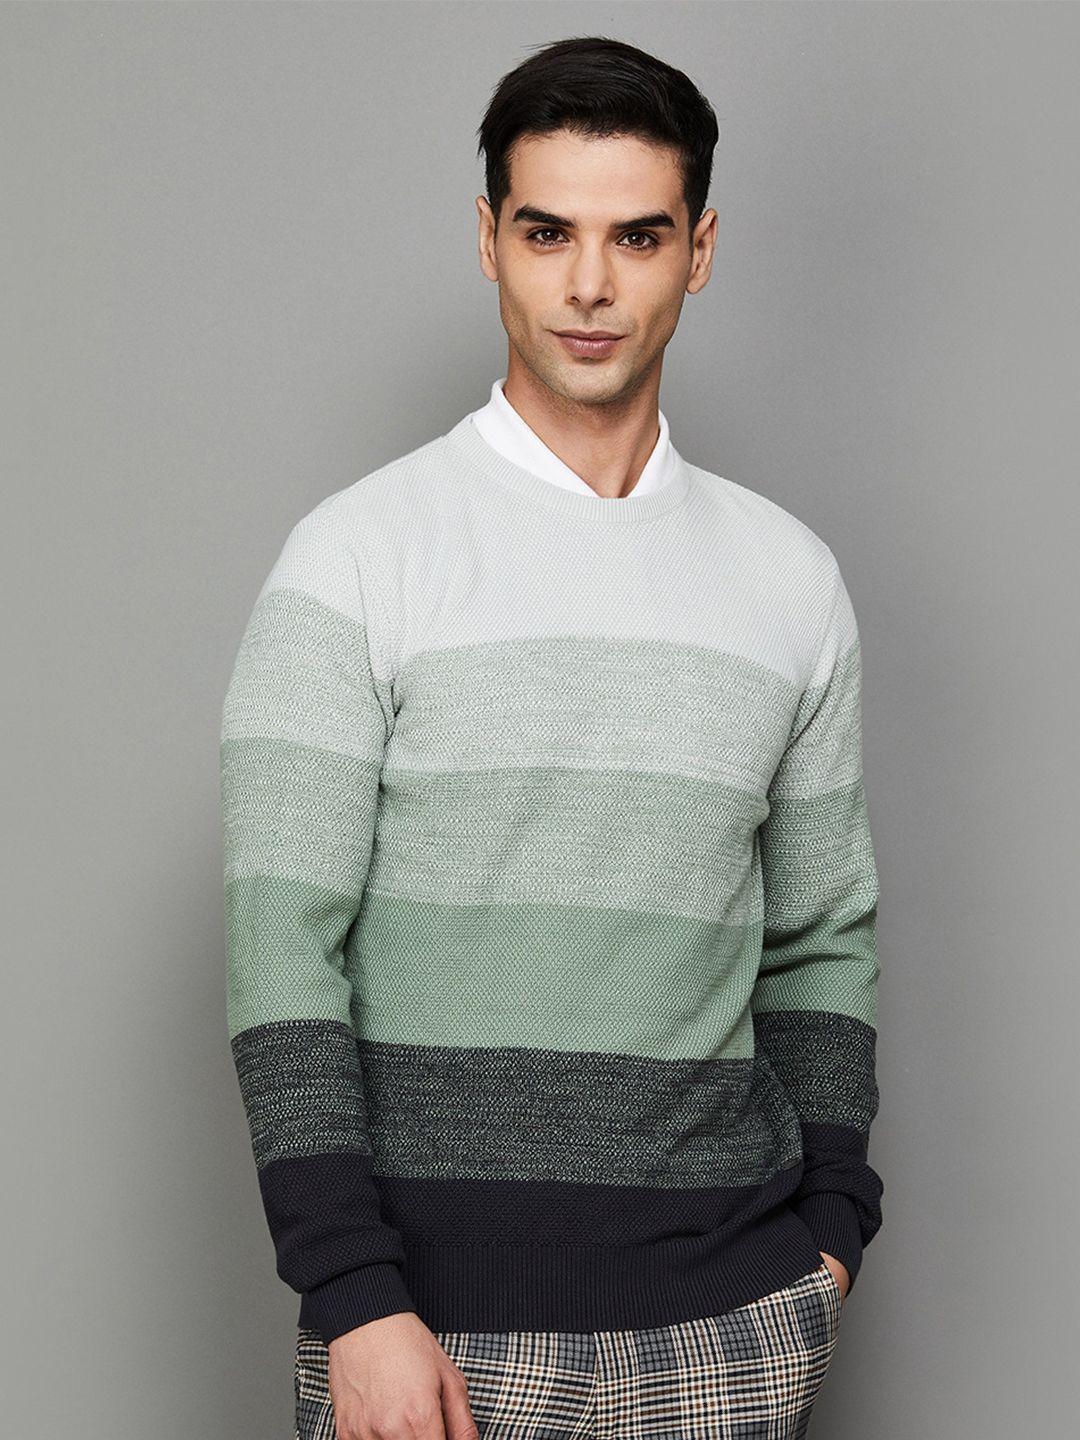 code-by-lifestyle-colourblocked-sweatshirts